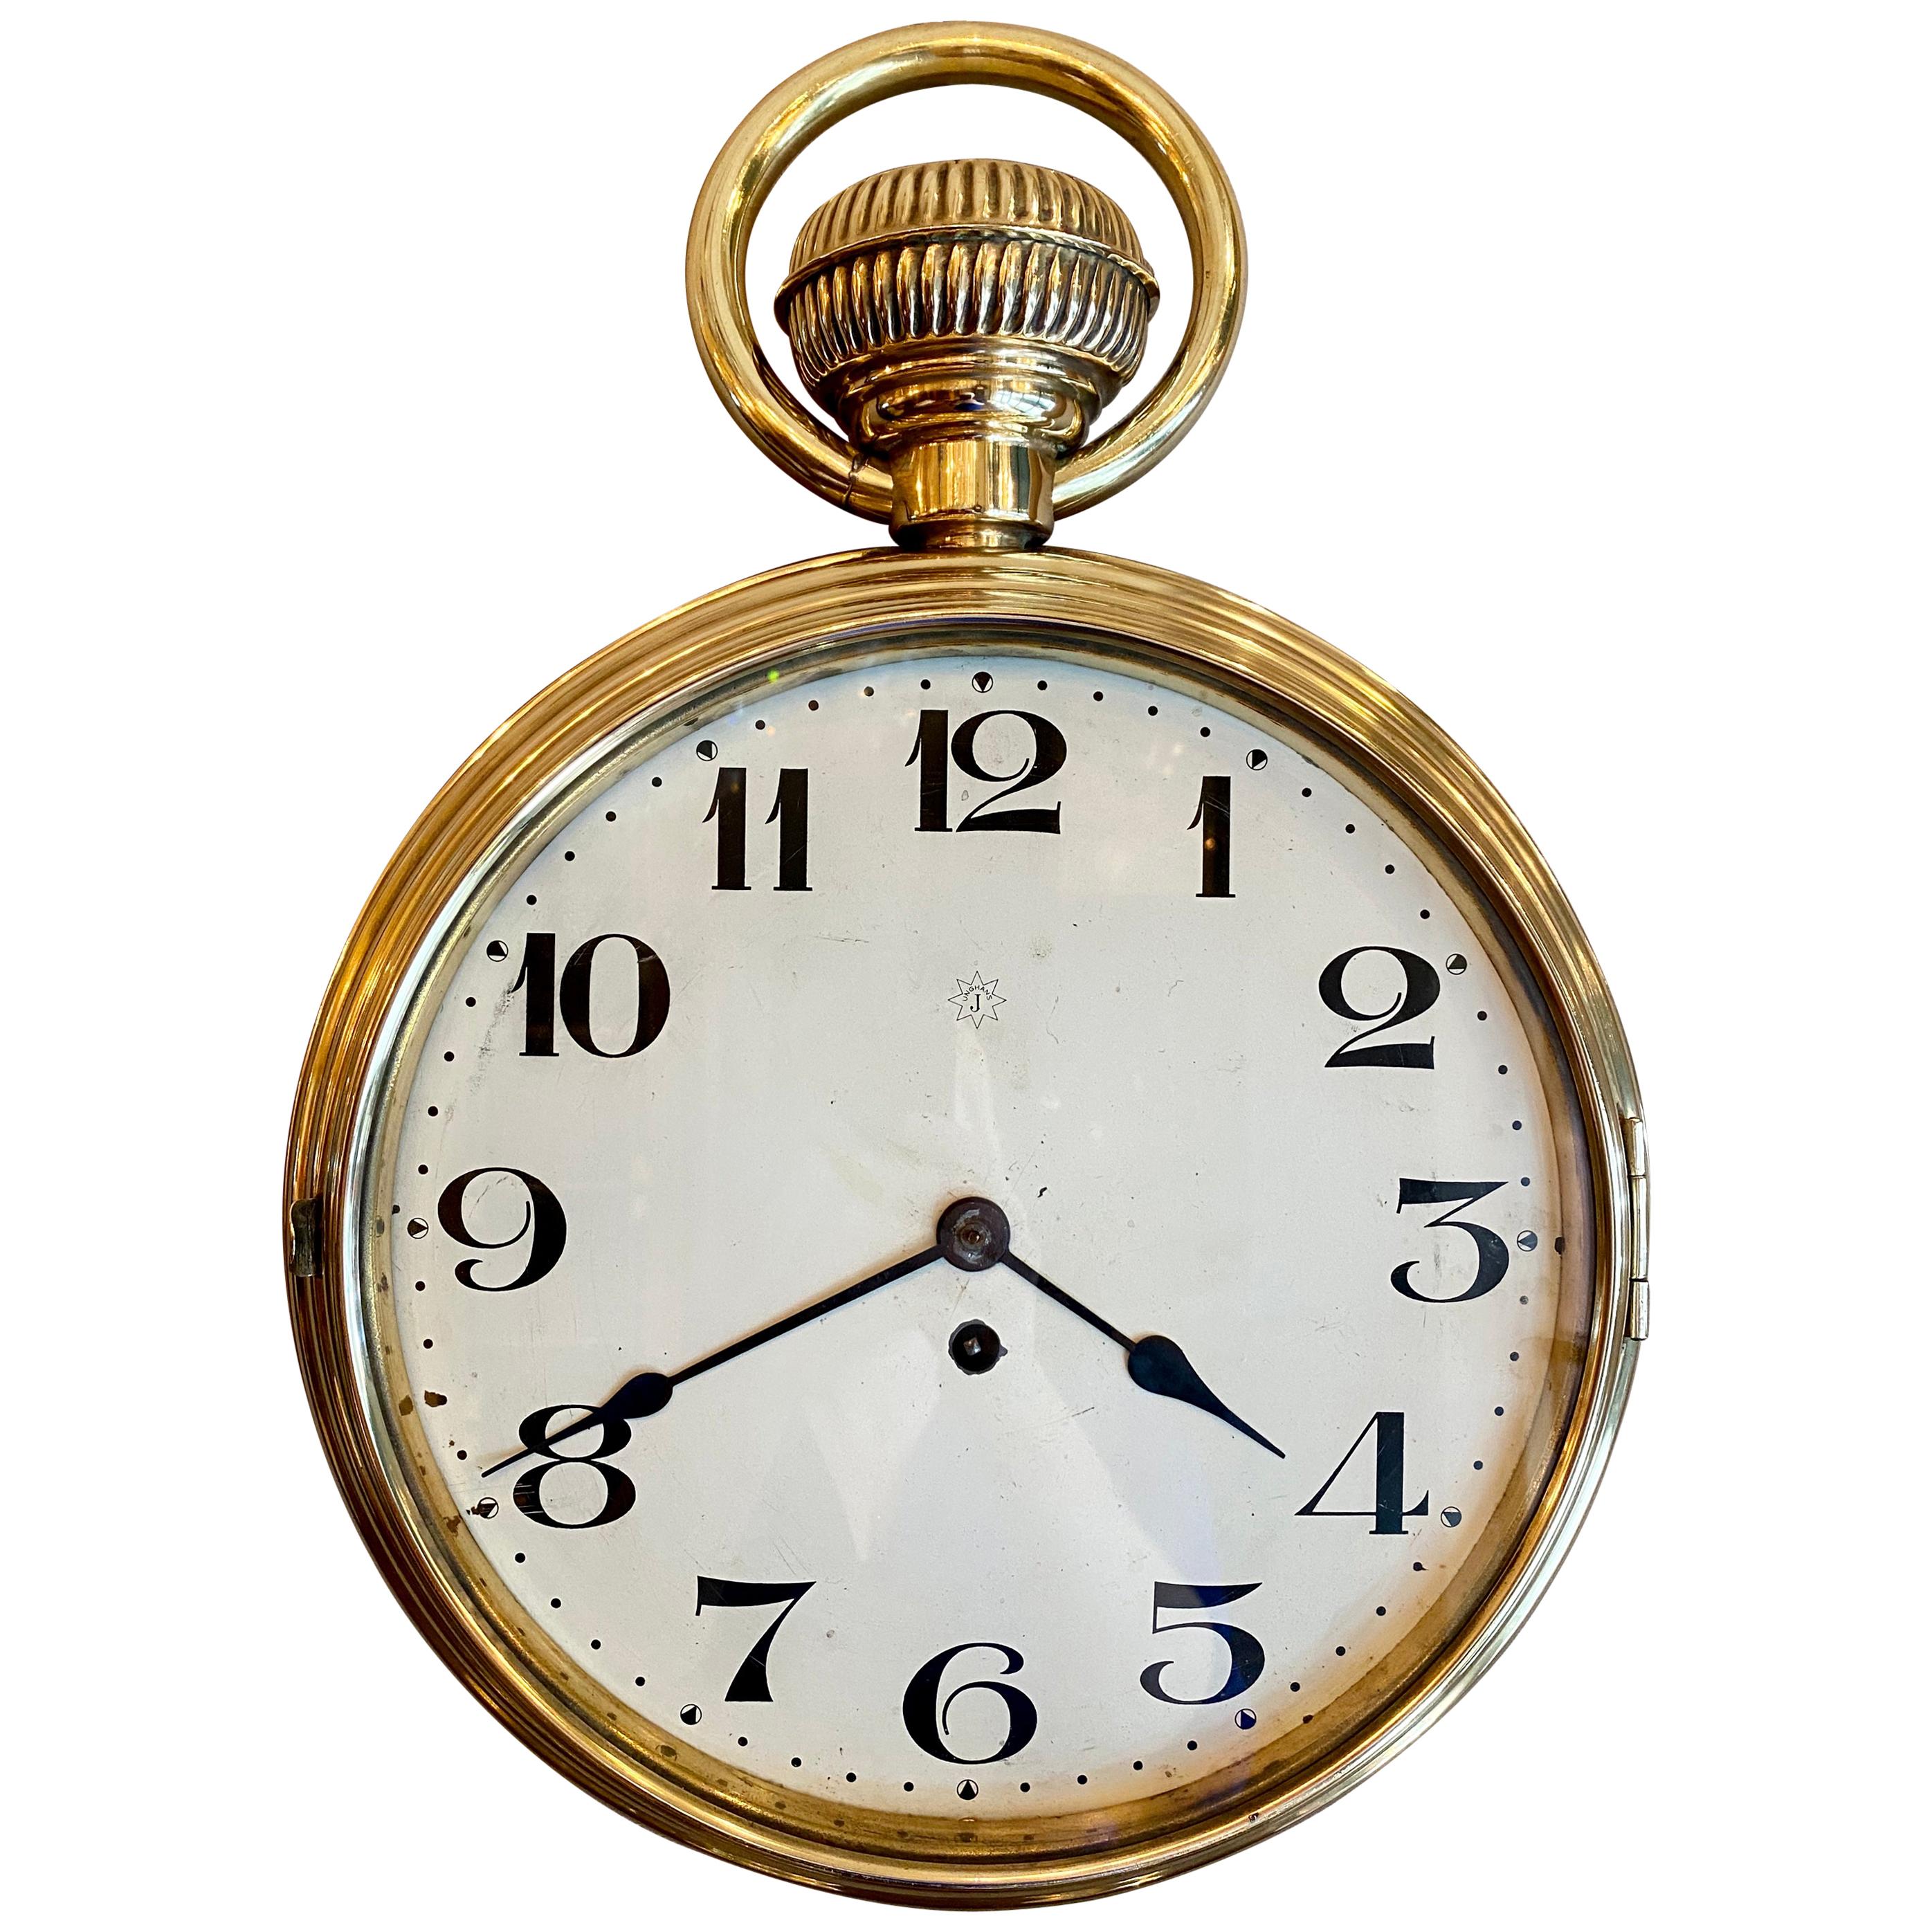 Antique Brass Wall Clock in Running Order, Pocket Watch Style, circa 1890-1900